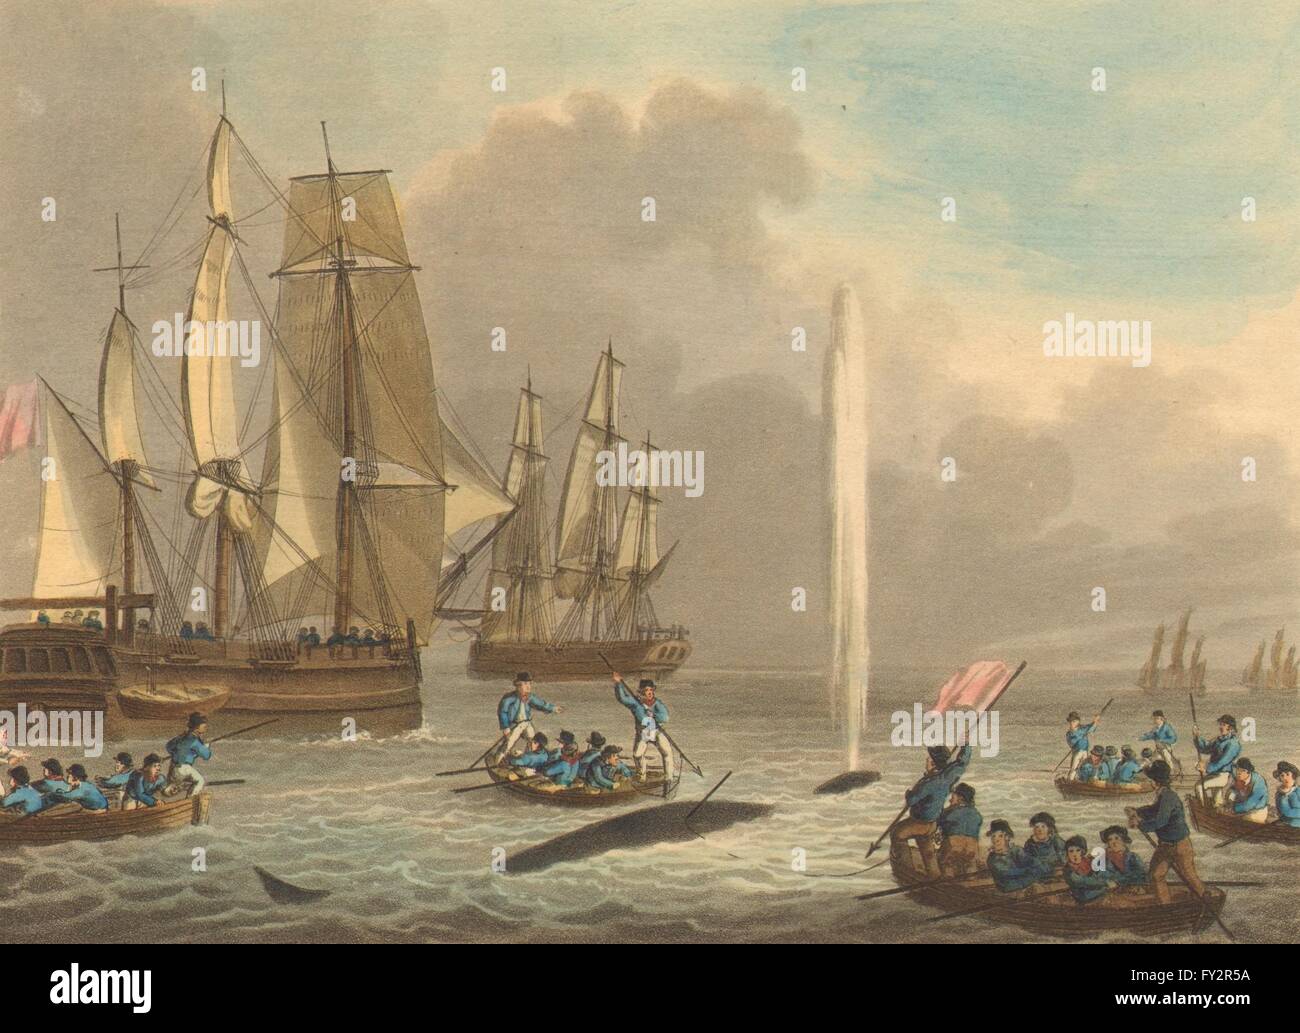 WALFANG 2:Boat erschöpft sich nähernden Wal fast (Bereich Sport-Edward Orme) 1814 Stockfoto